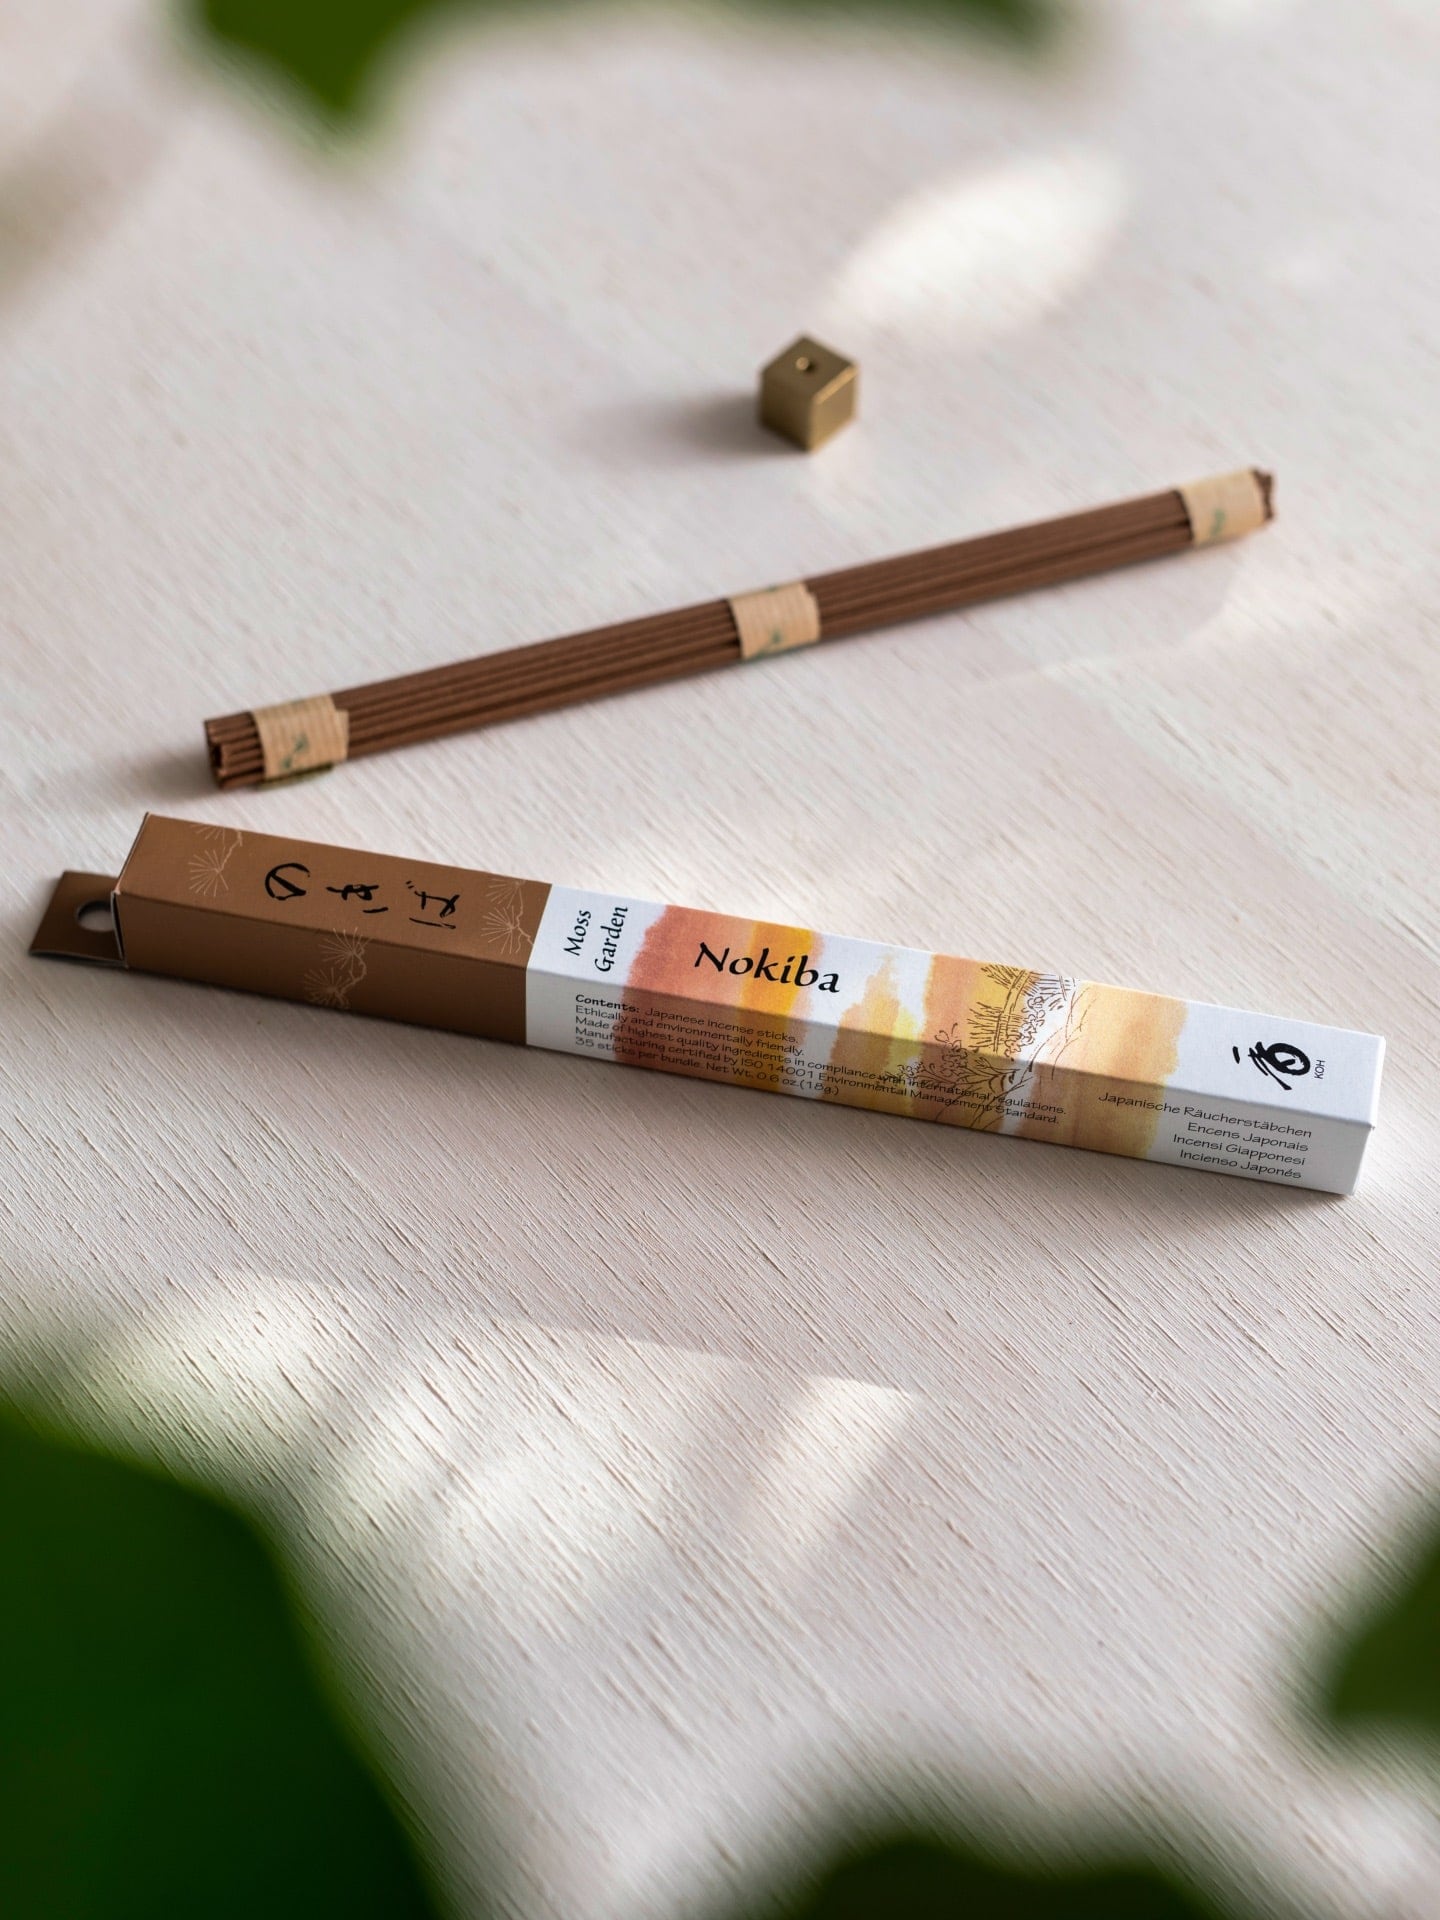 A pack of Moss Garden – Nokiba incense sticks on a wooden table by Senko.